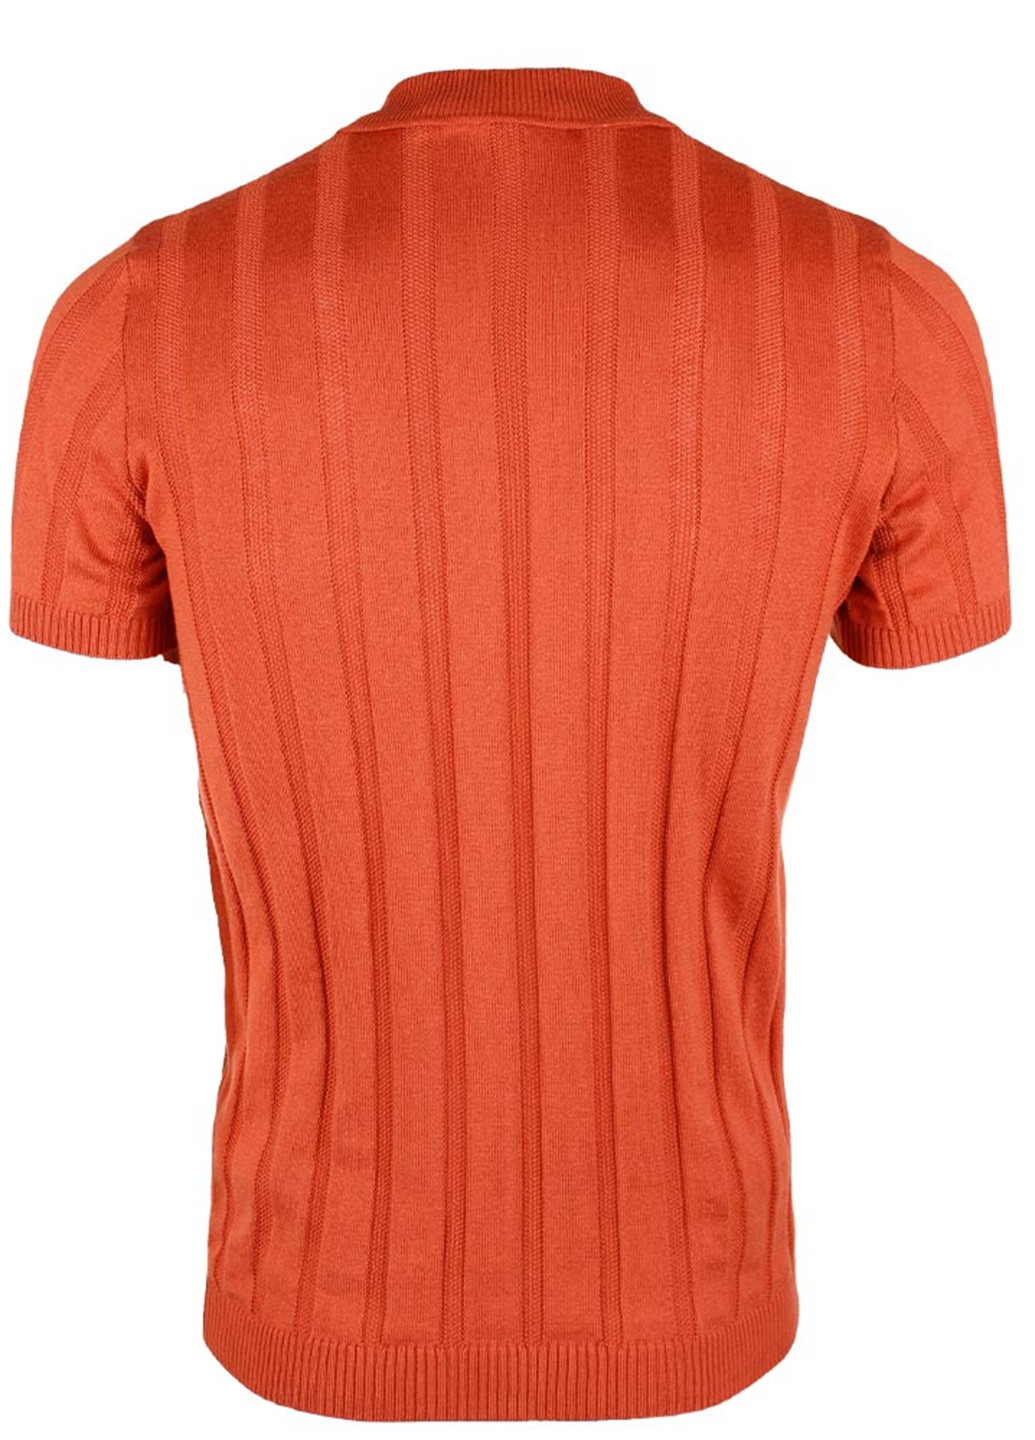 Оранжевая футболка-поло для мужчин VD One однотонная